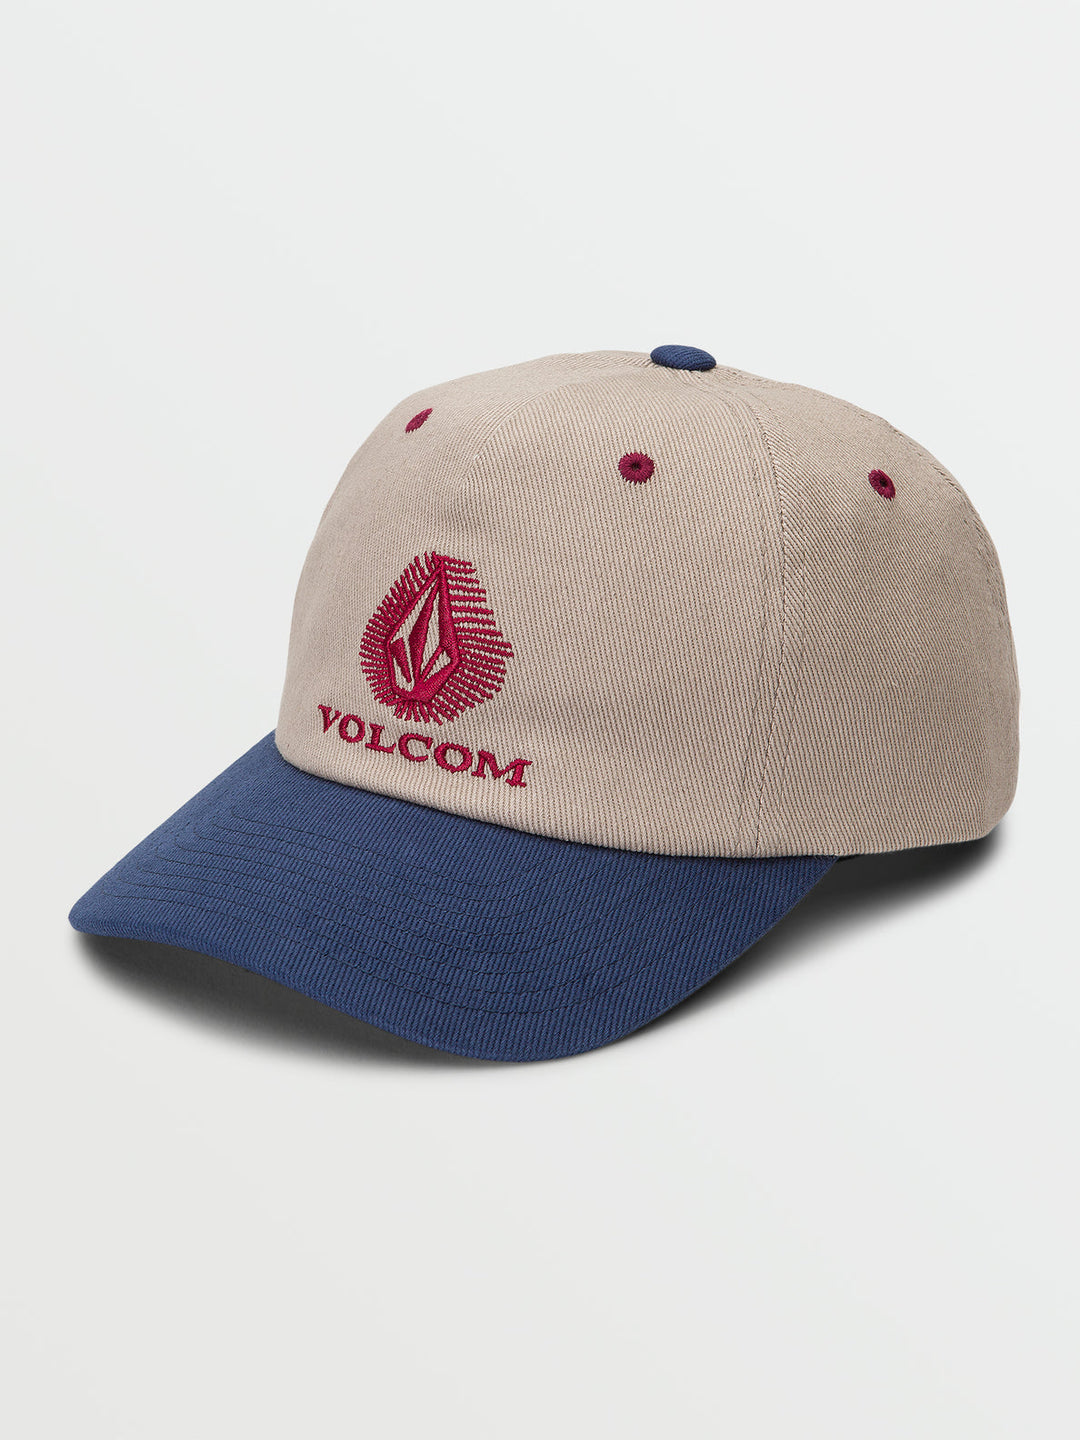 Volcom Ray Stone Adjustable Hat - Tower Grey - Sun Diego Boardshop